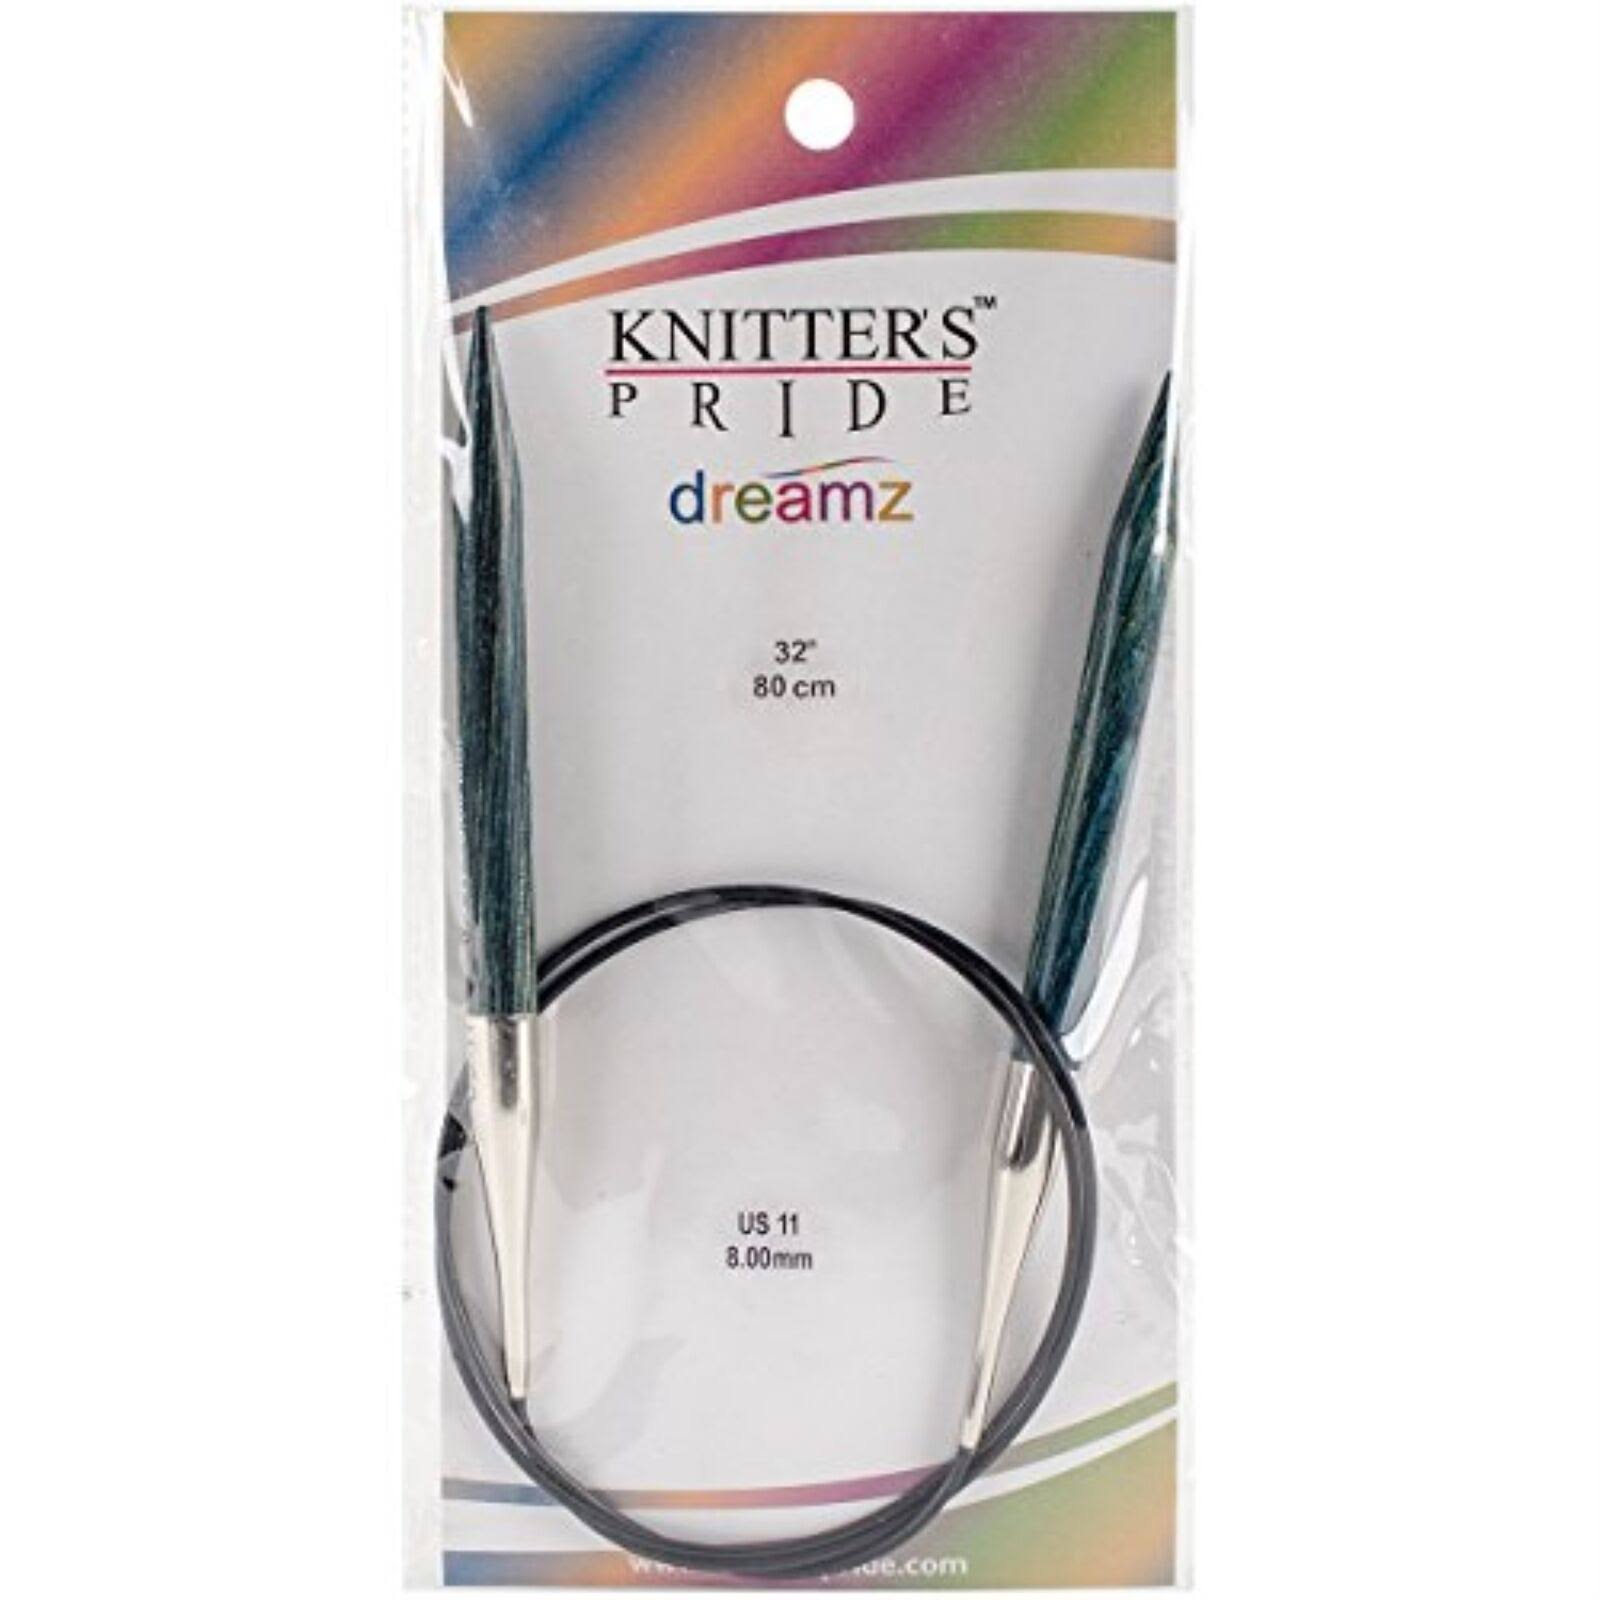 Knitters Pride Dreamz Circular Knitting Needles - 32", Size 11, 8mm